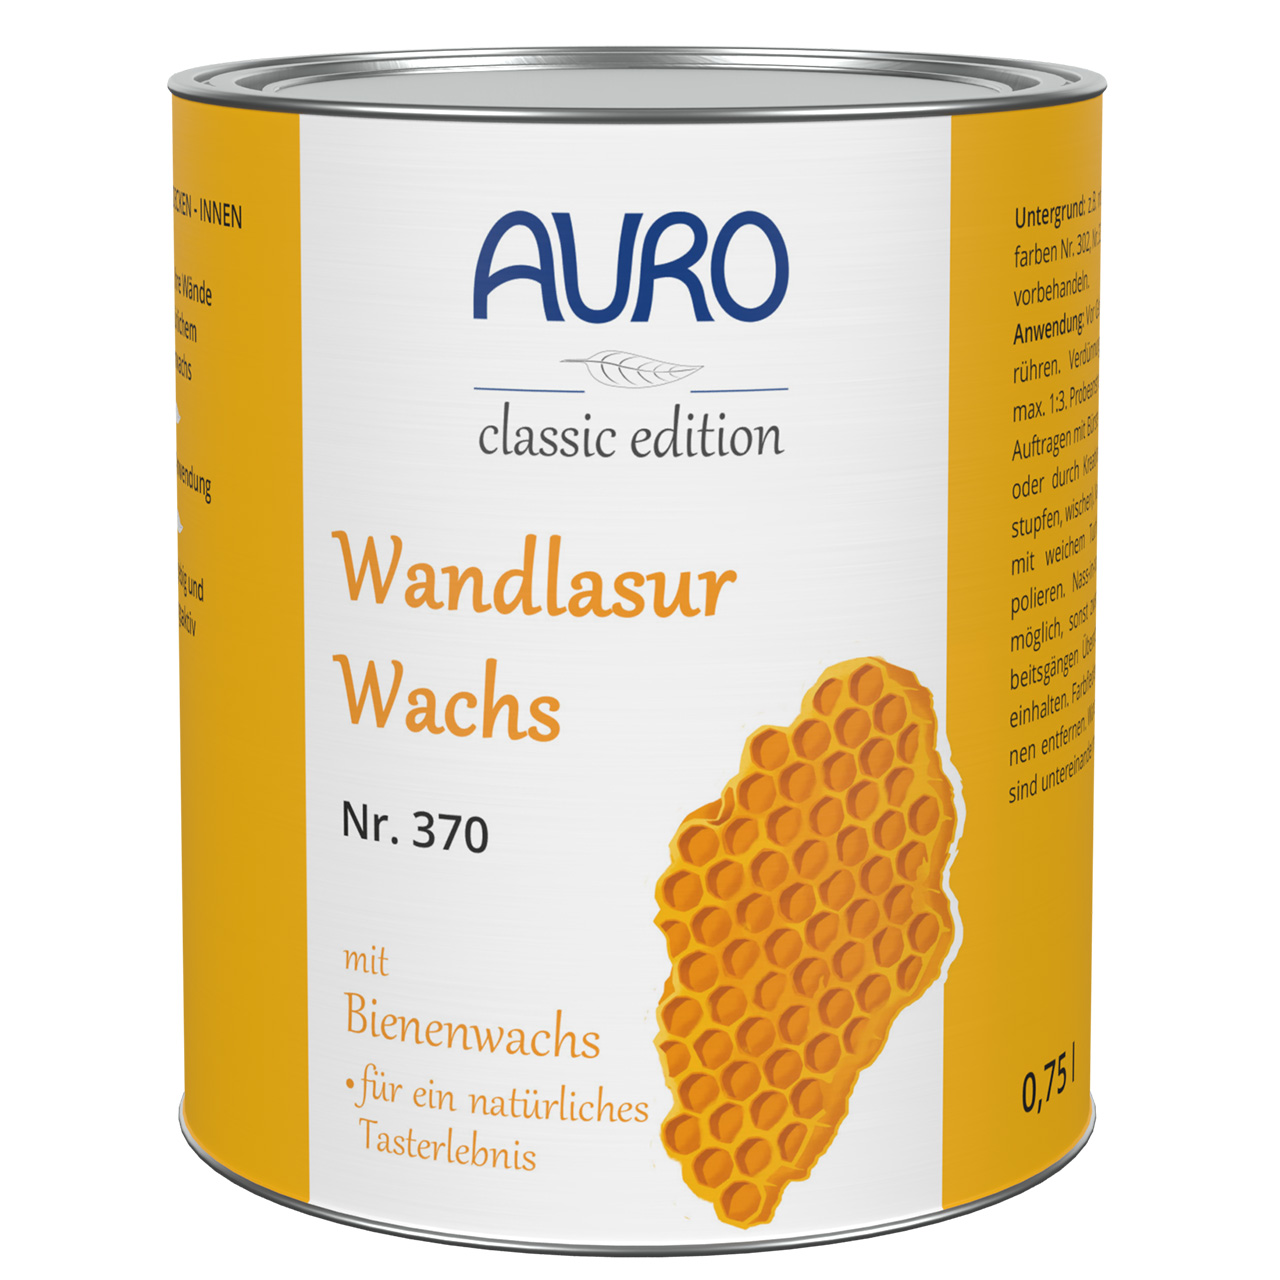 AURO Wandlasur-Wachs Nr. 370